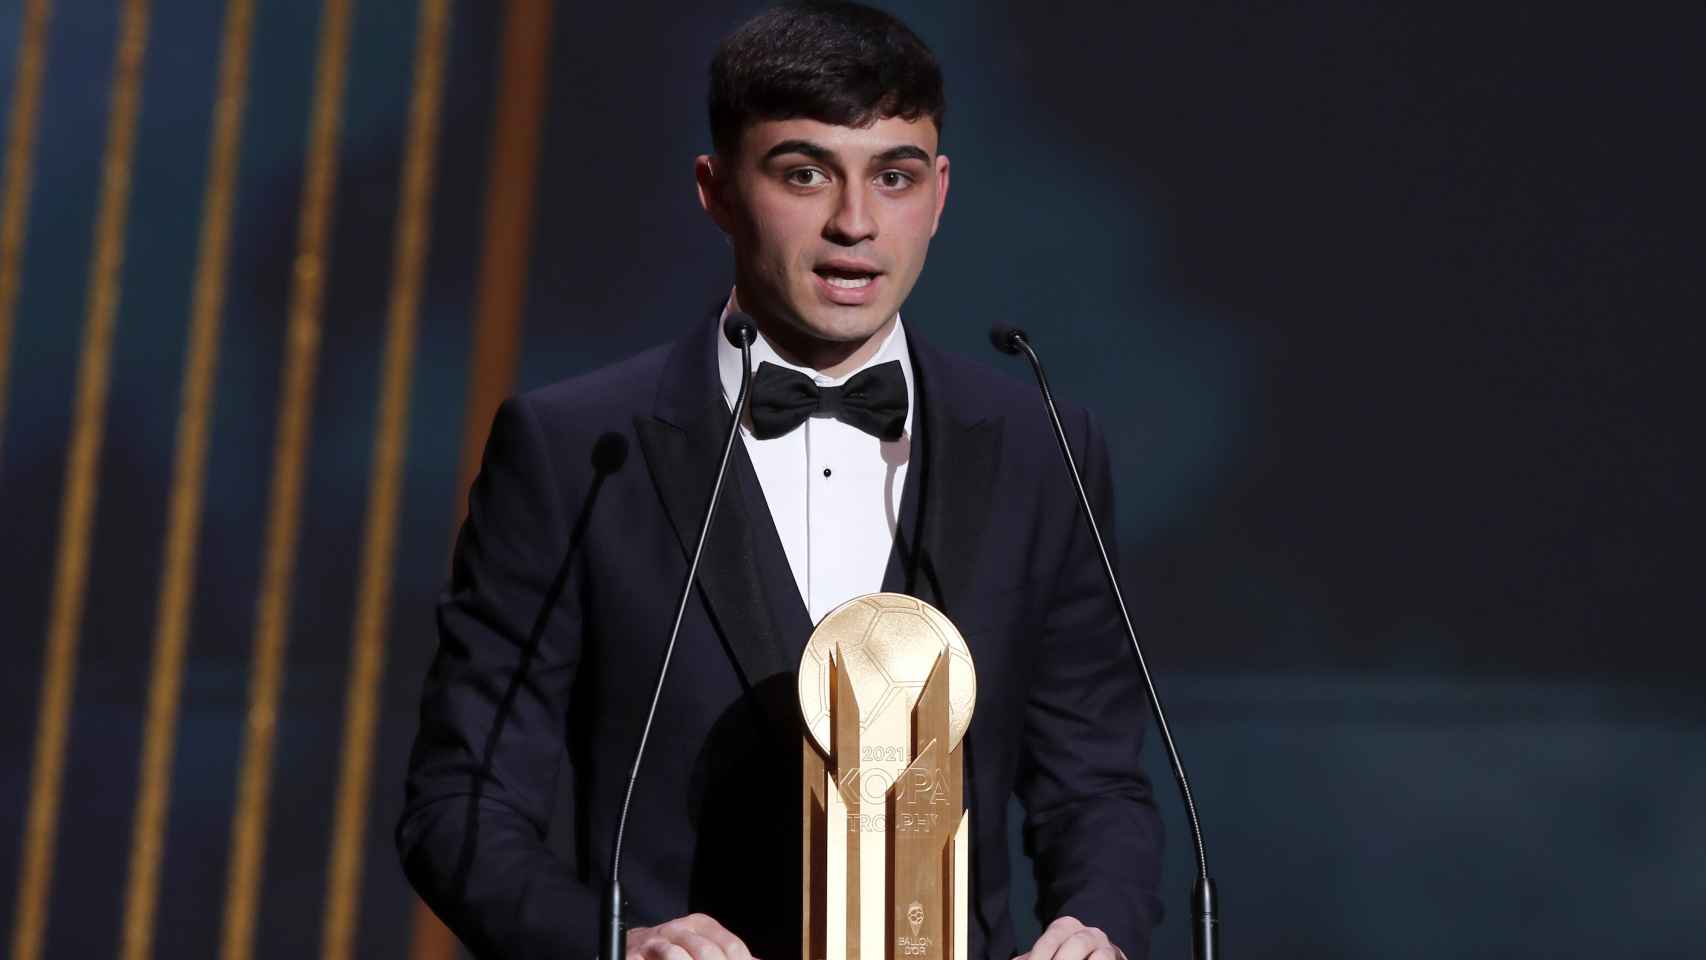 Pedri González gana el Trofeo Raymond Kopa 2021 al mejor futbolista joven del año